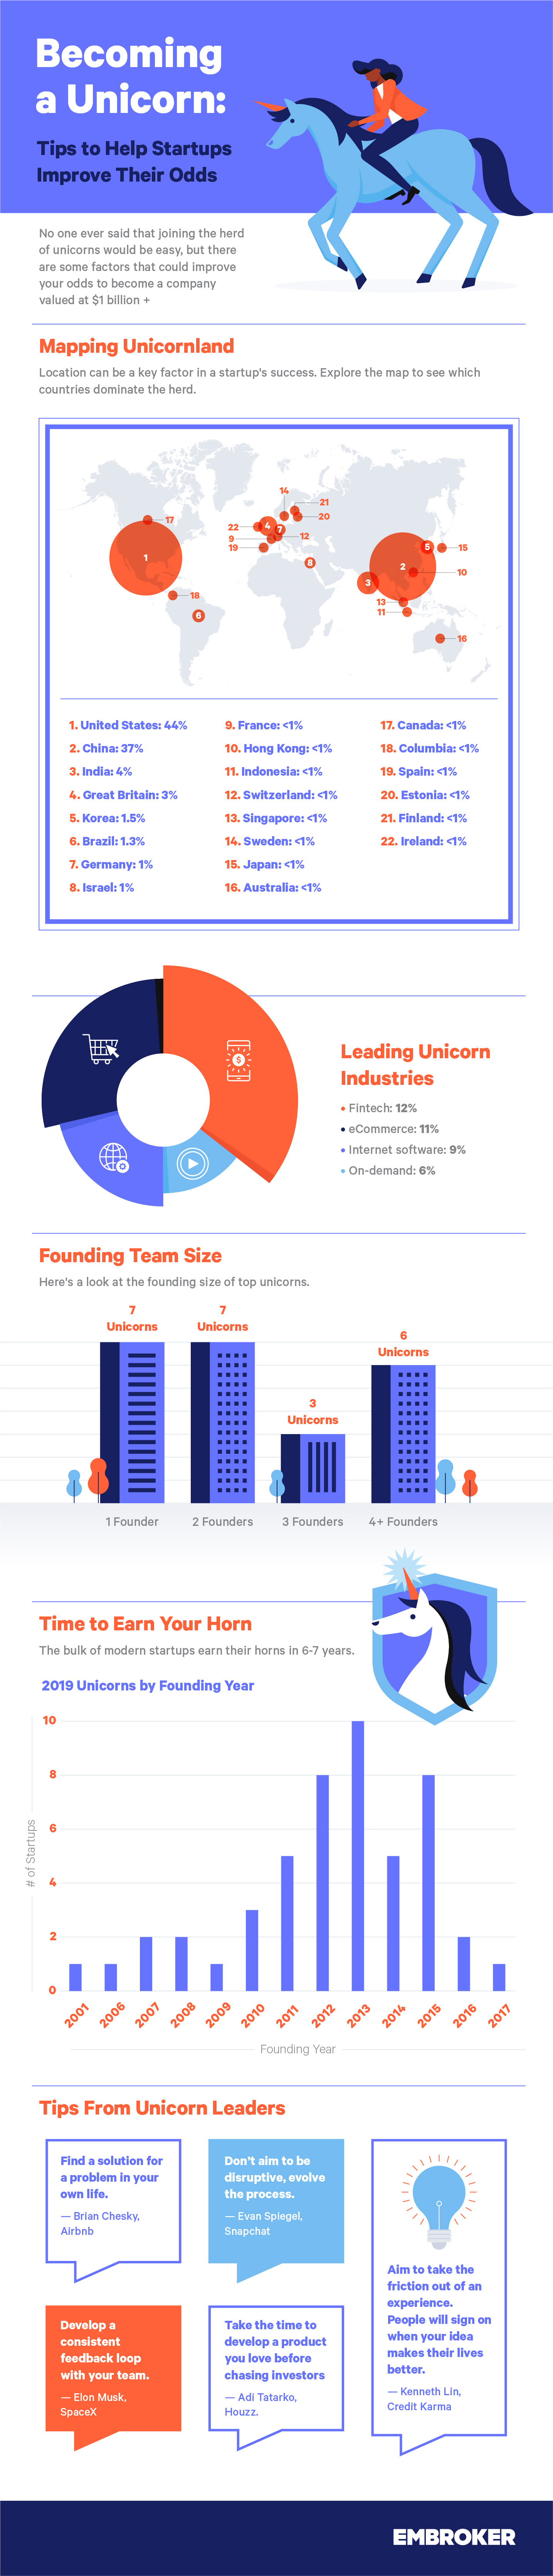 What-Makes-A-Unicorn-Startup2x (4).jpg